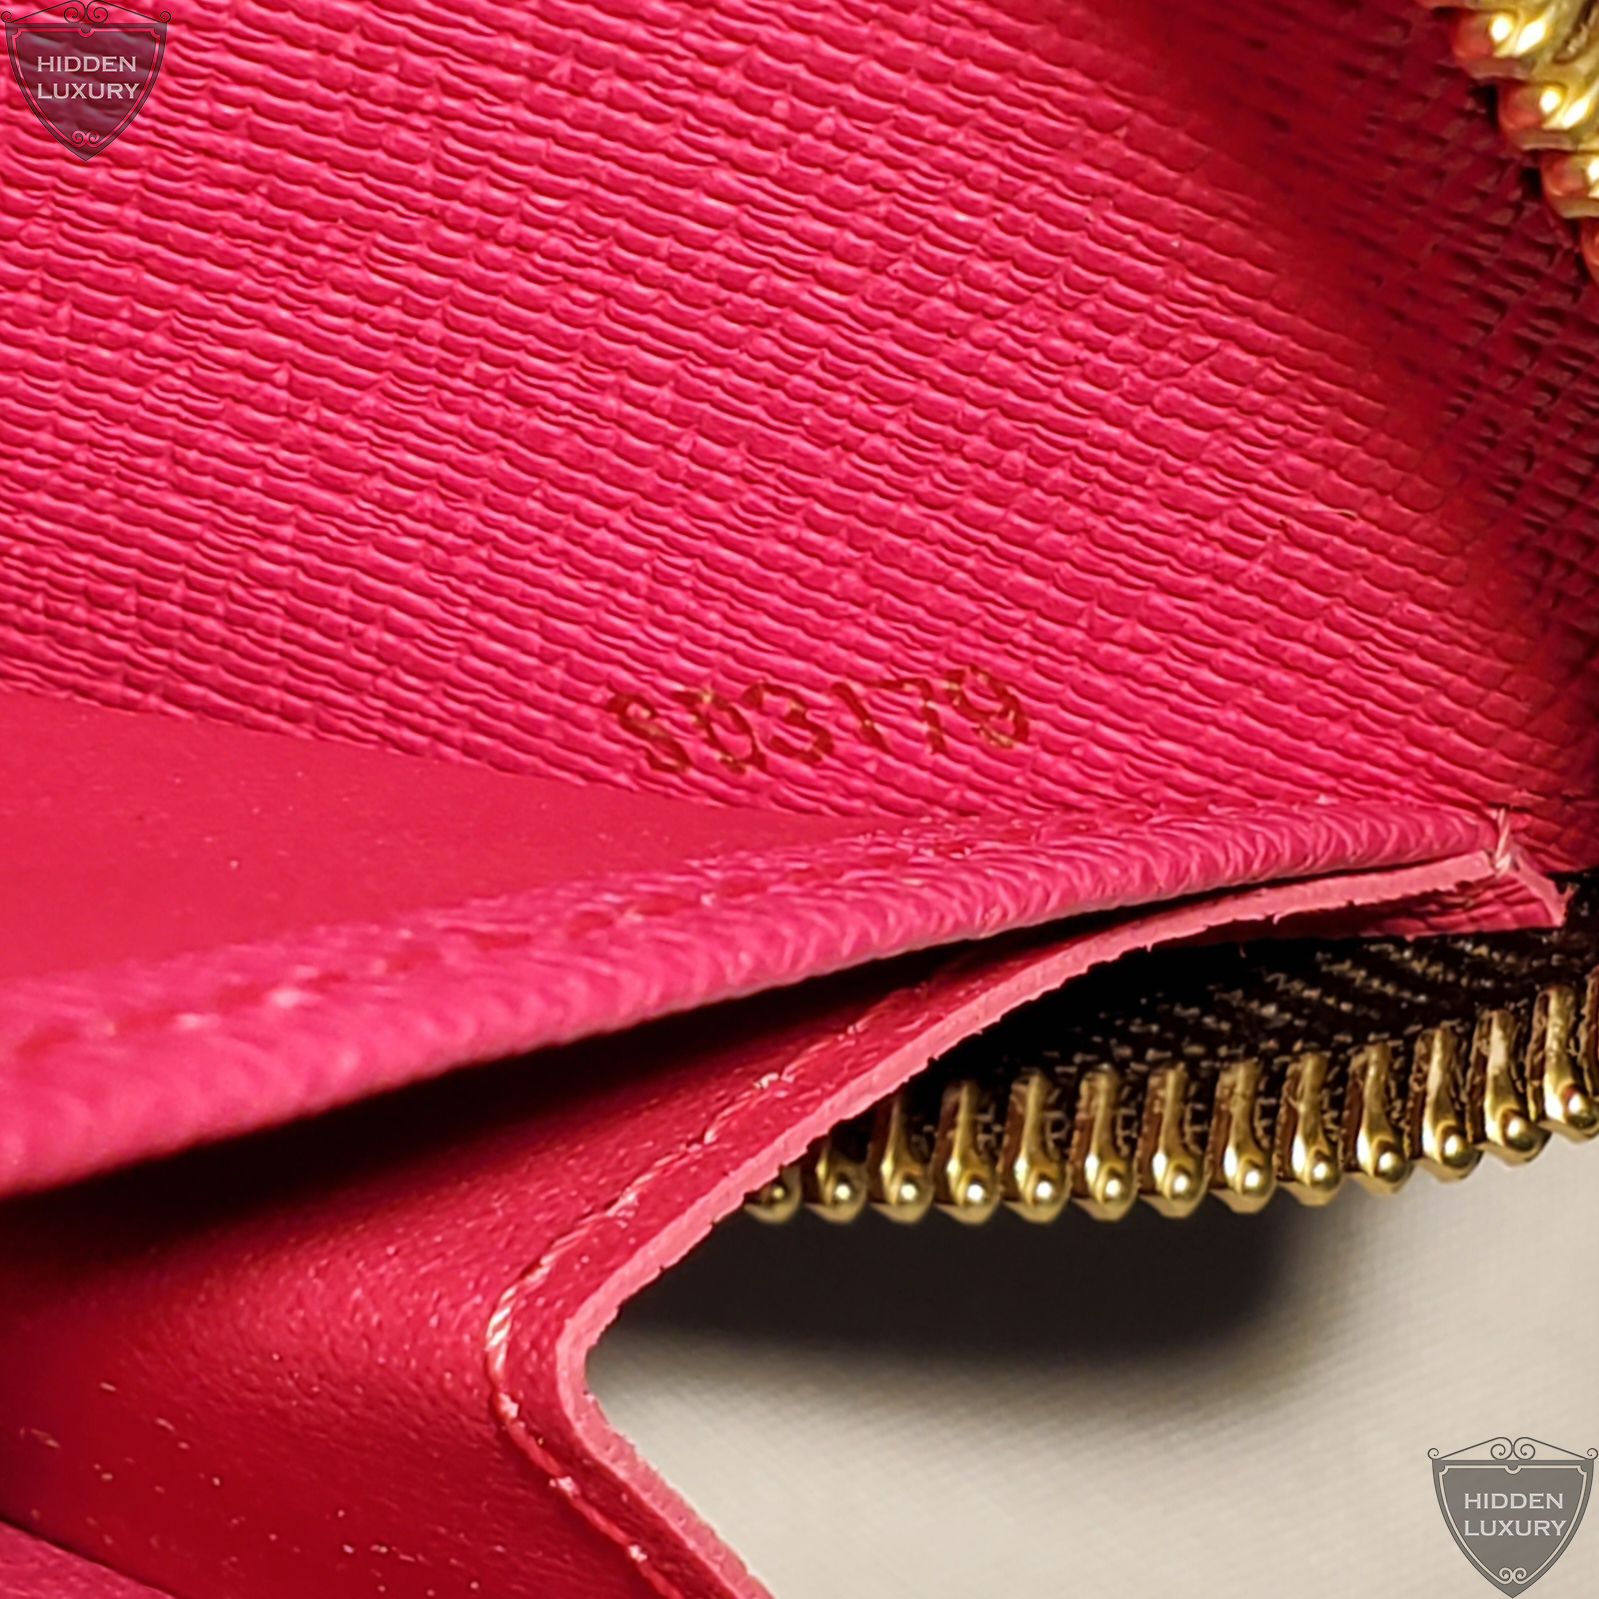 Louis Vuitton Zippy Coin Purse Vivienne Holiday Damier Ebene/Pink